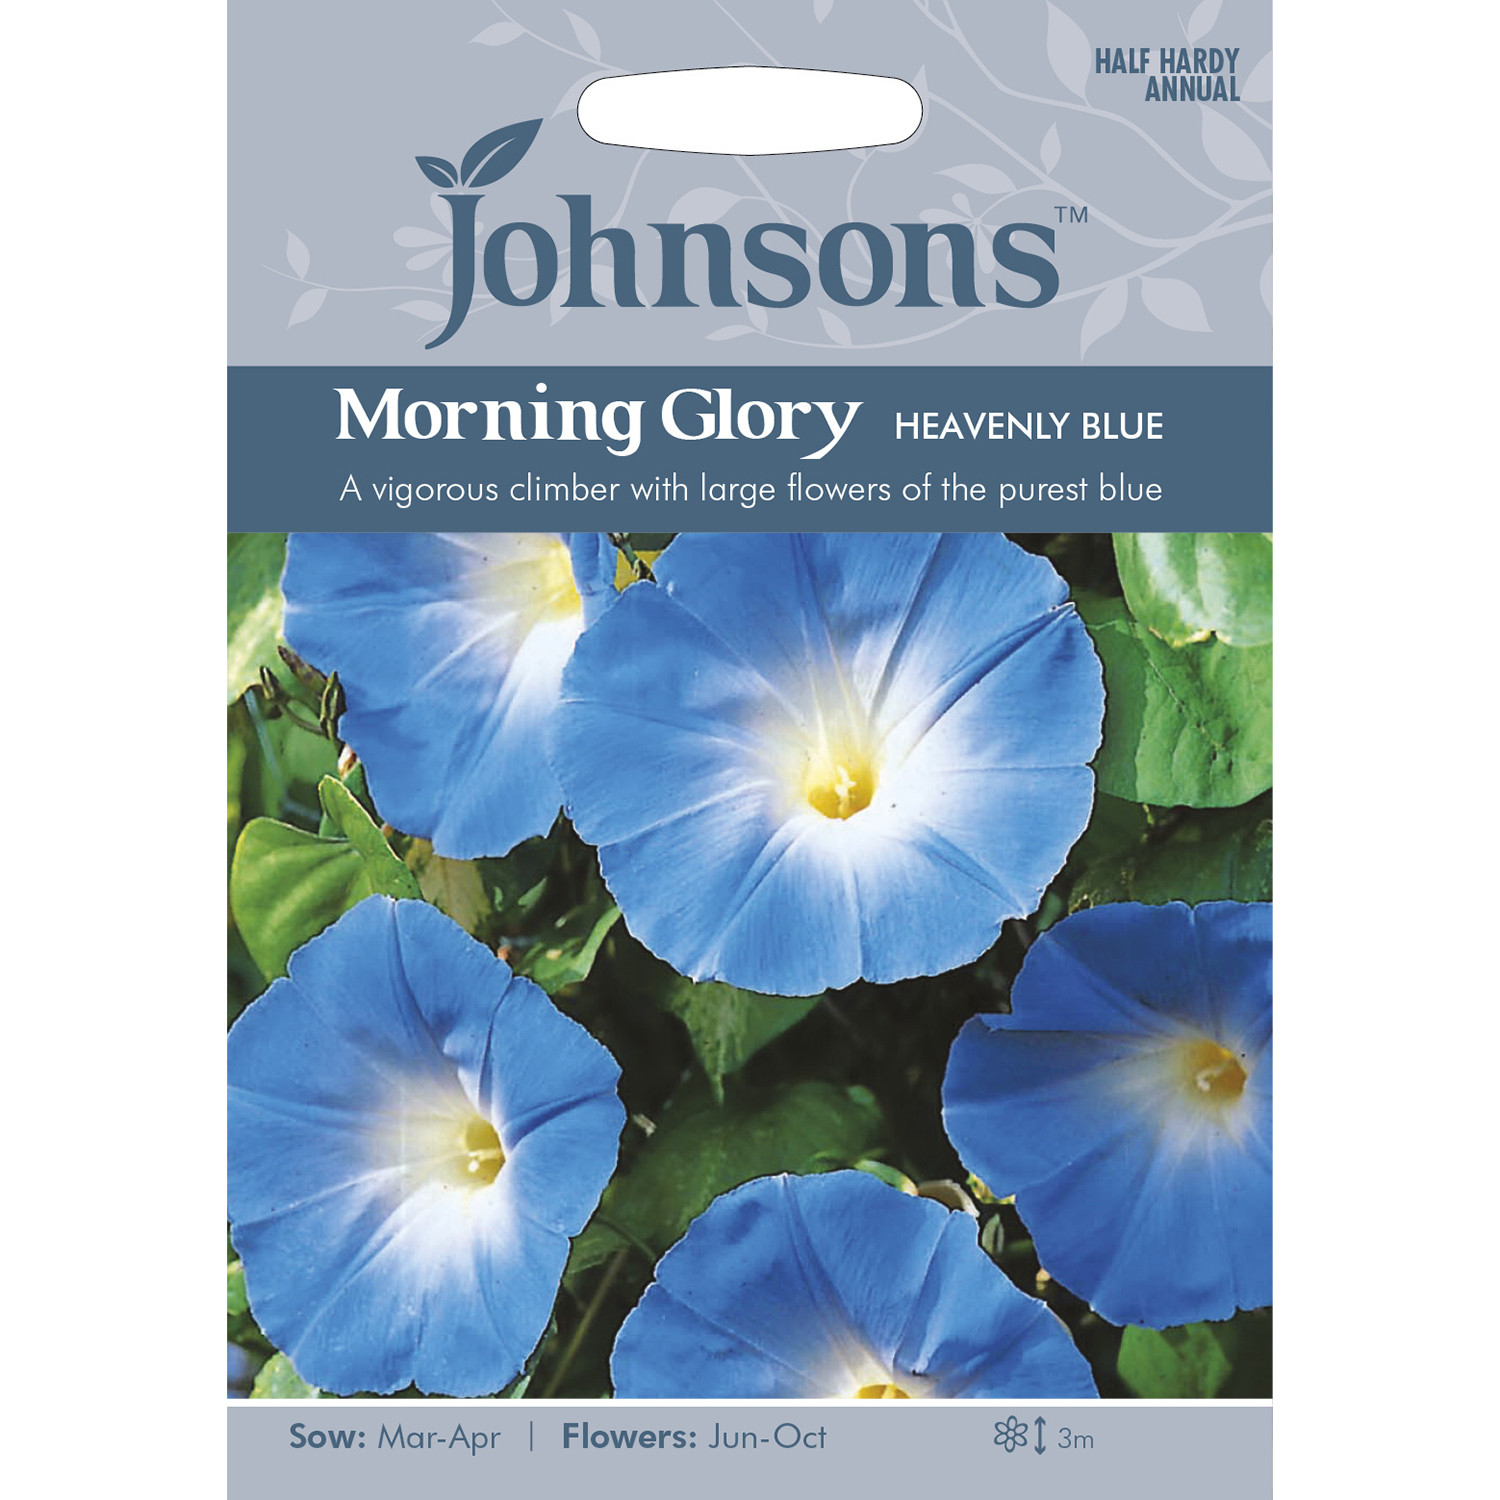 Johnsons Morning Glory Heavenly Blue Flower Seeds Image 2